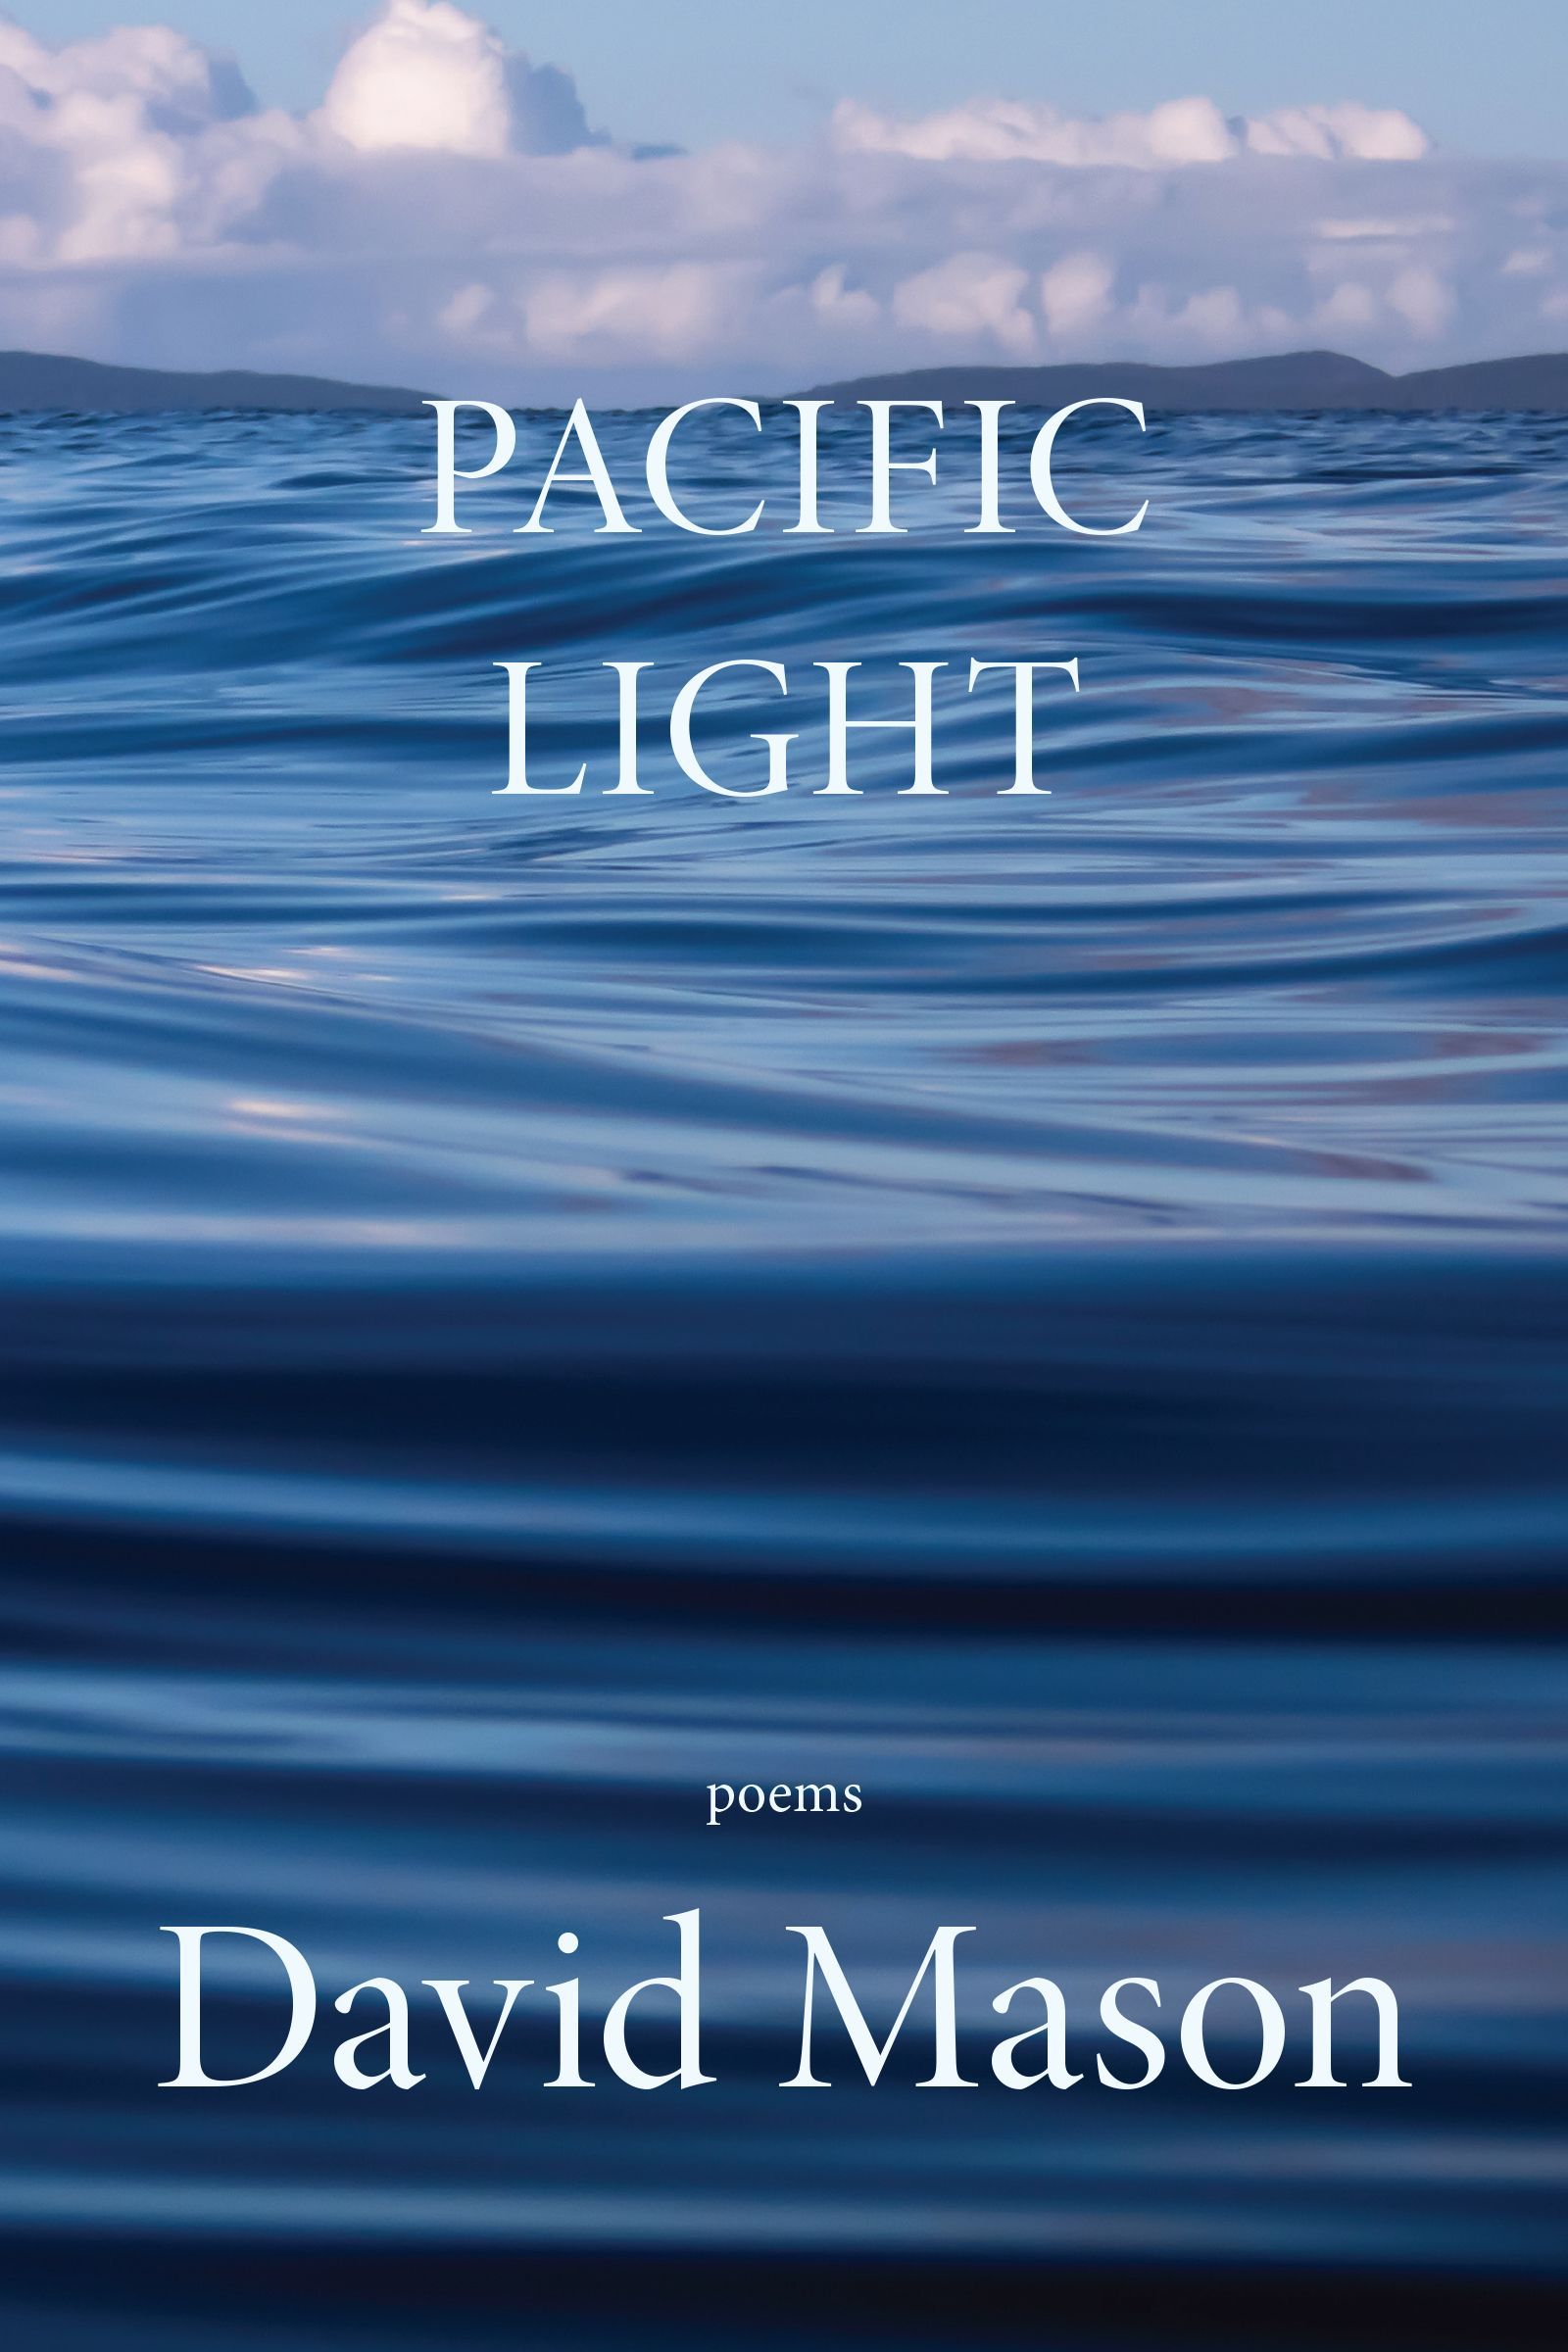 A Precarious Peace: On David Mason’s “Pacific Light”